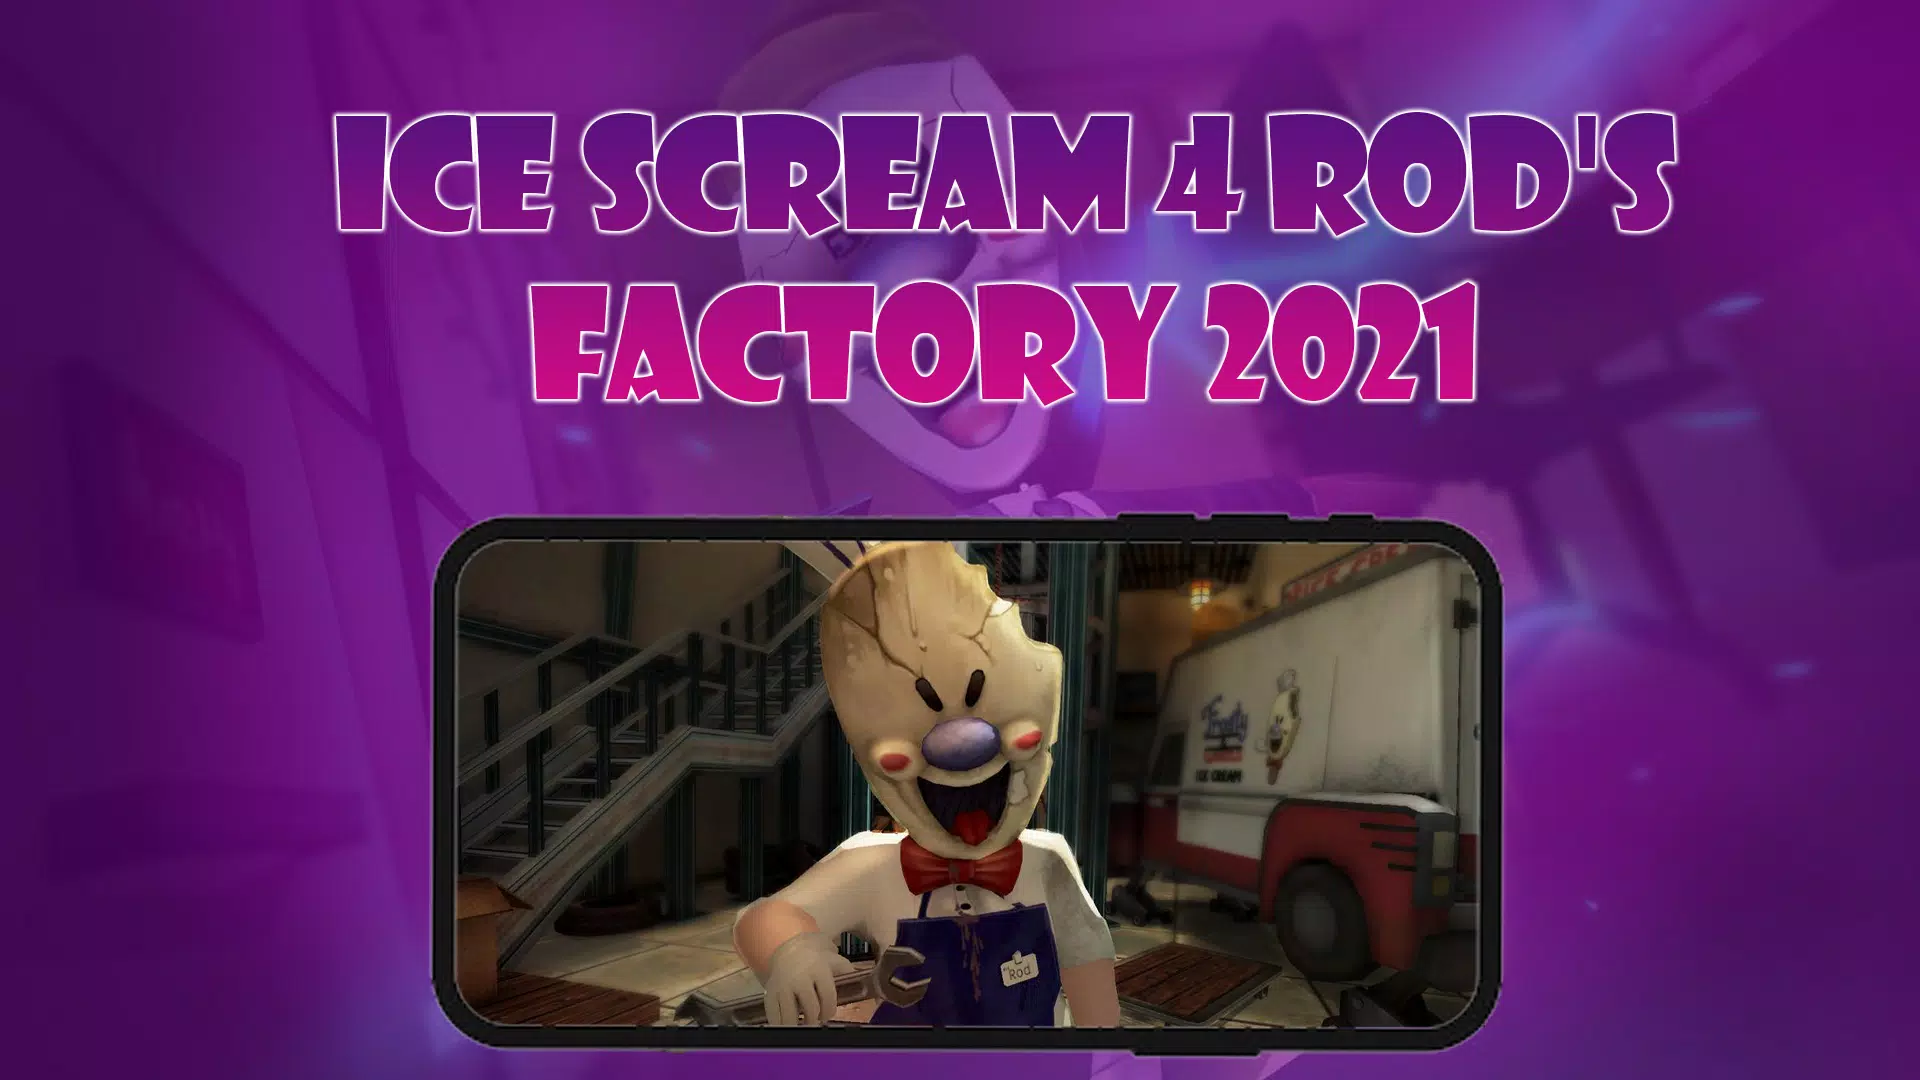 Ice Scream 4 Rod's Factory - Roblox